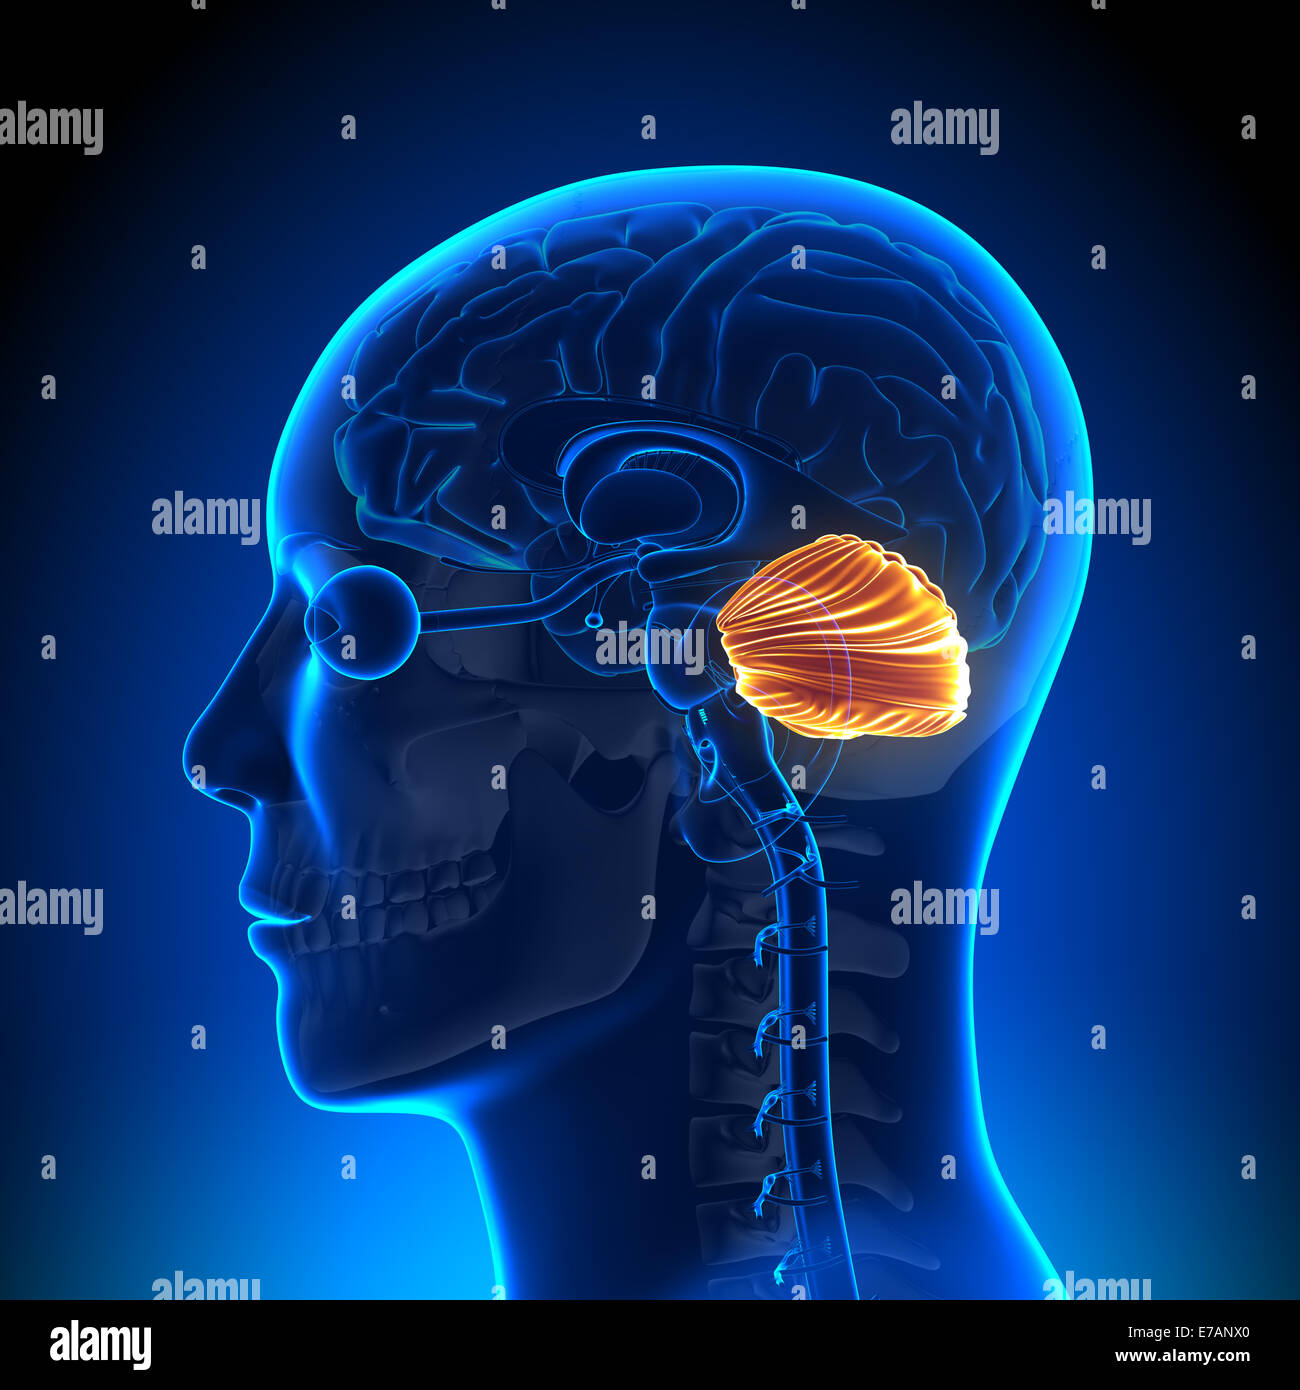 Cerebellum - Brain Anatomy Stock Photo - Alamy